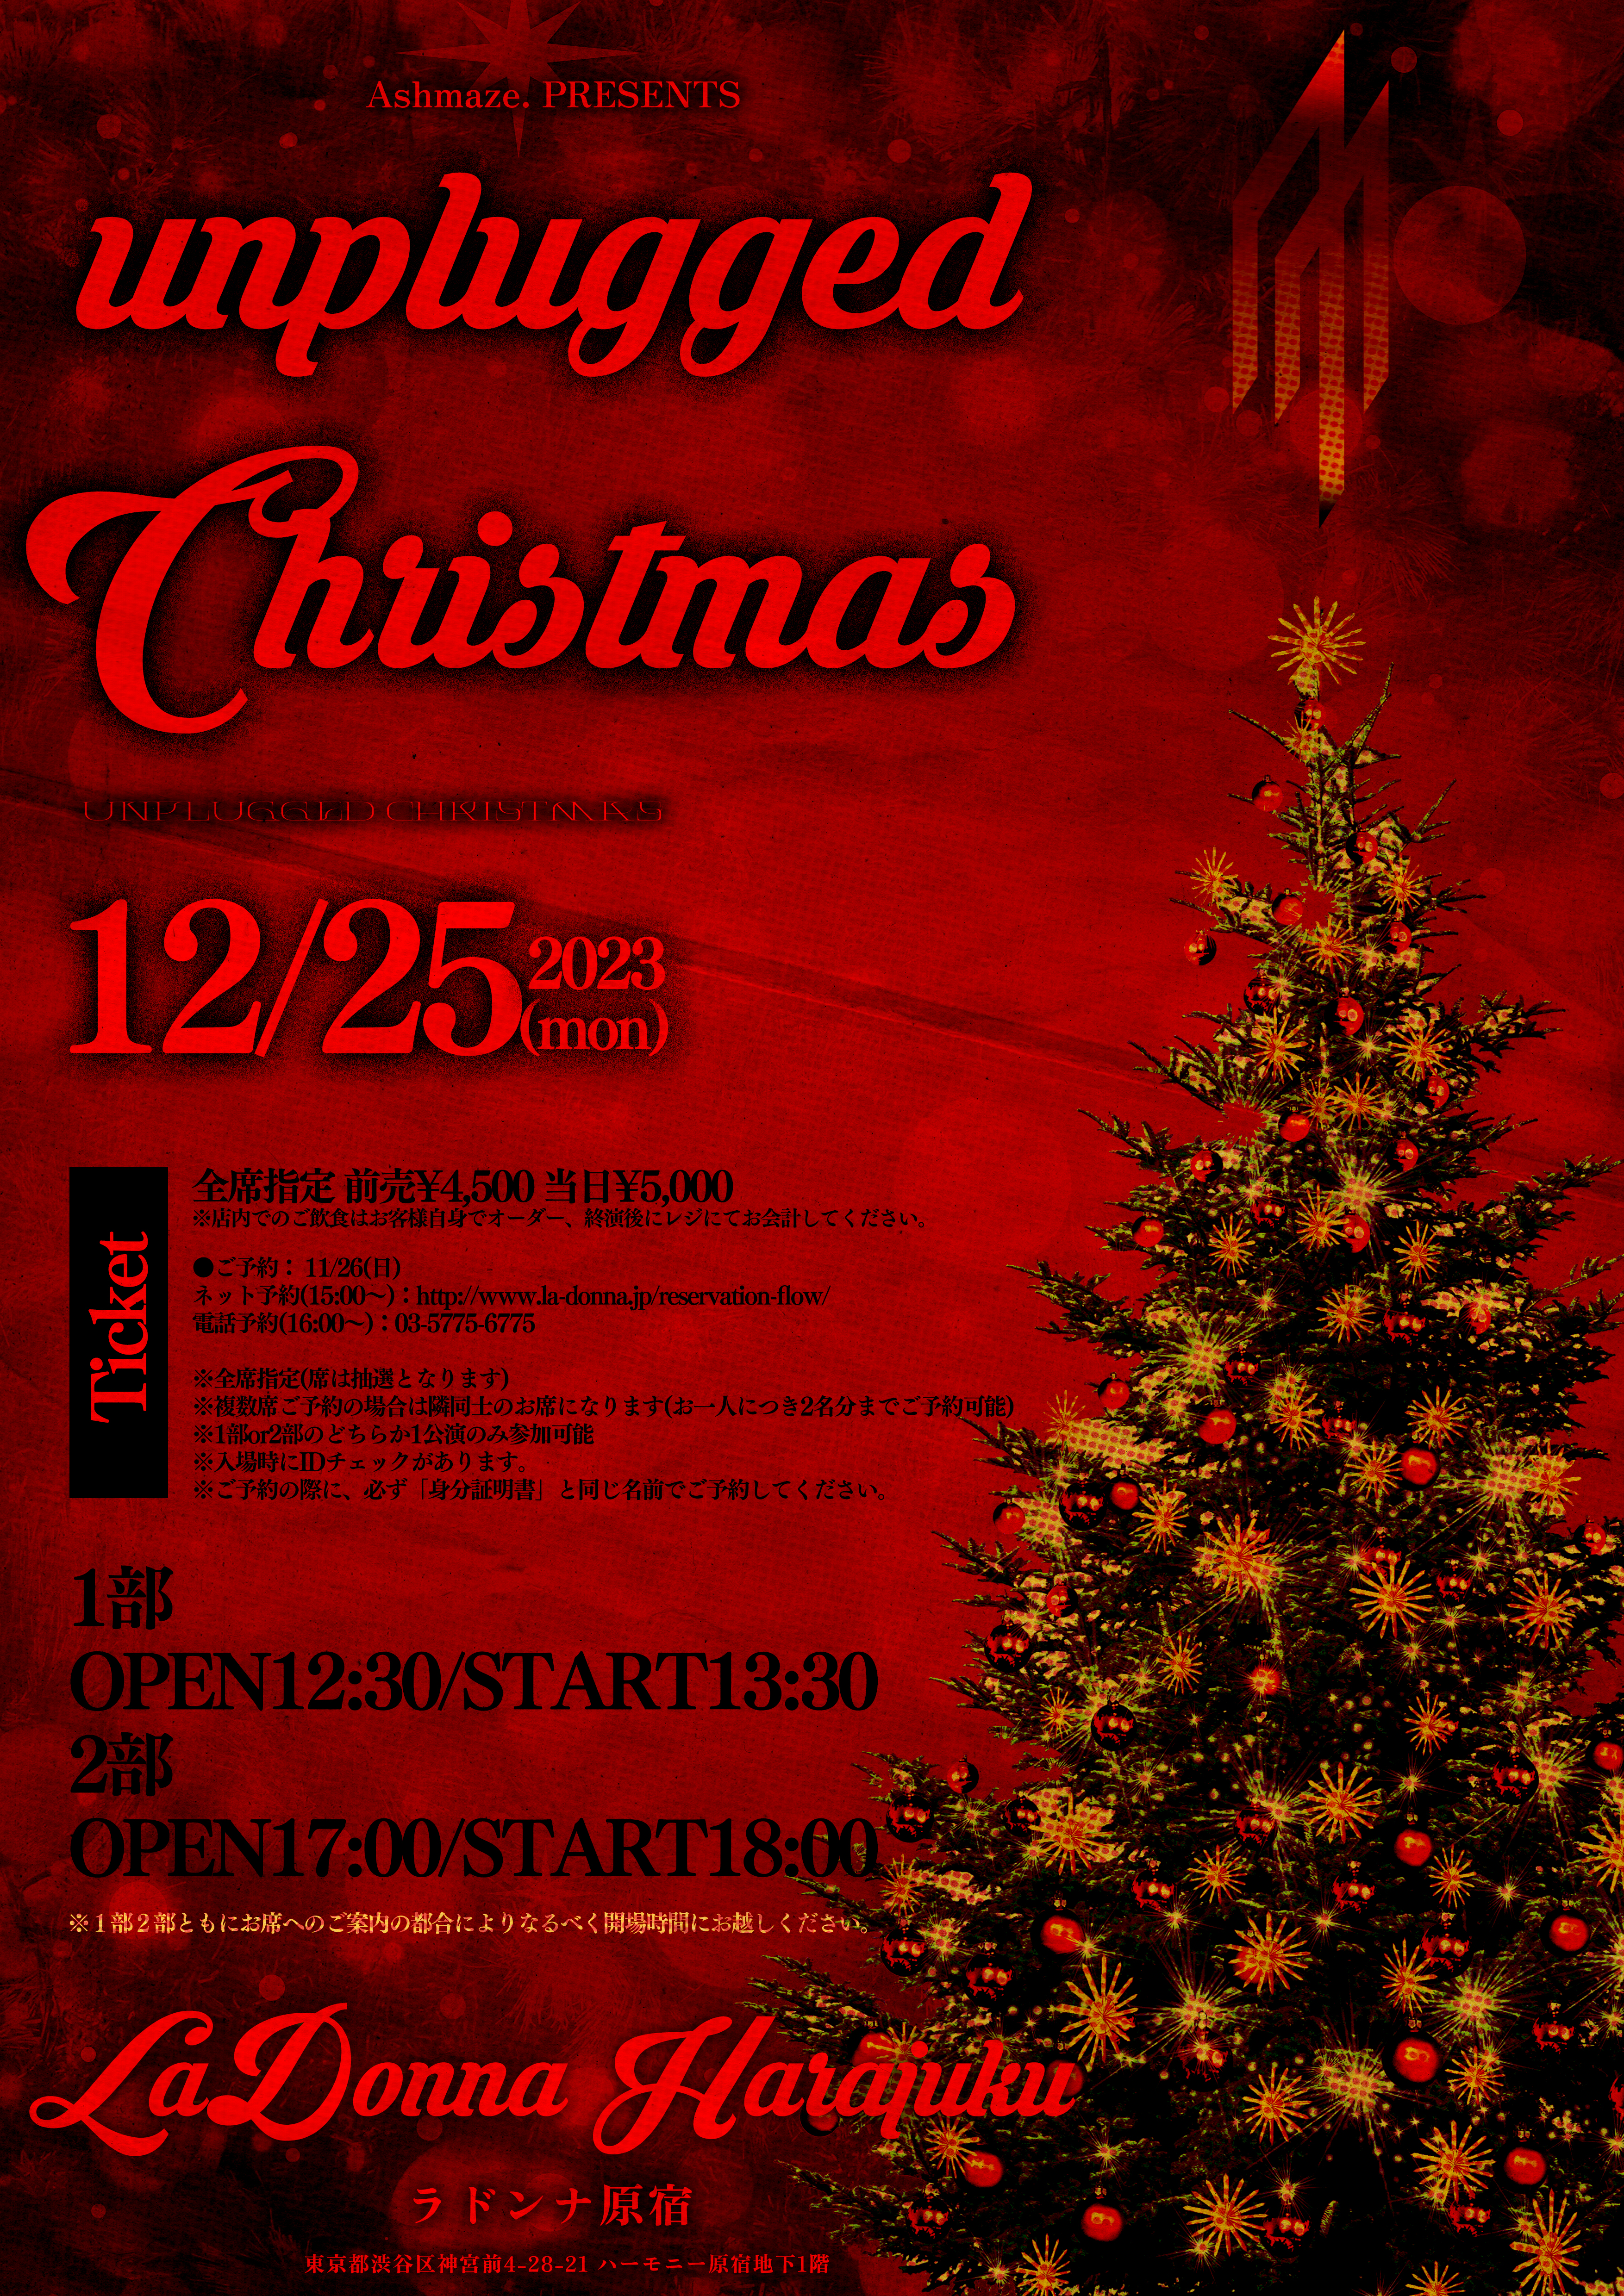 Ashmaze.Presents Acoustic ONEMAN｢unplugged Christmas｣【1部】